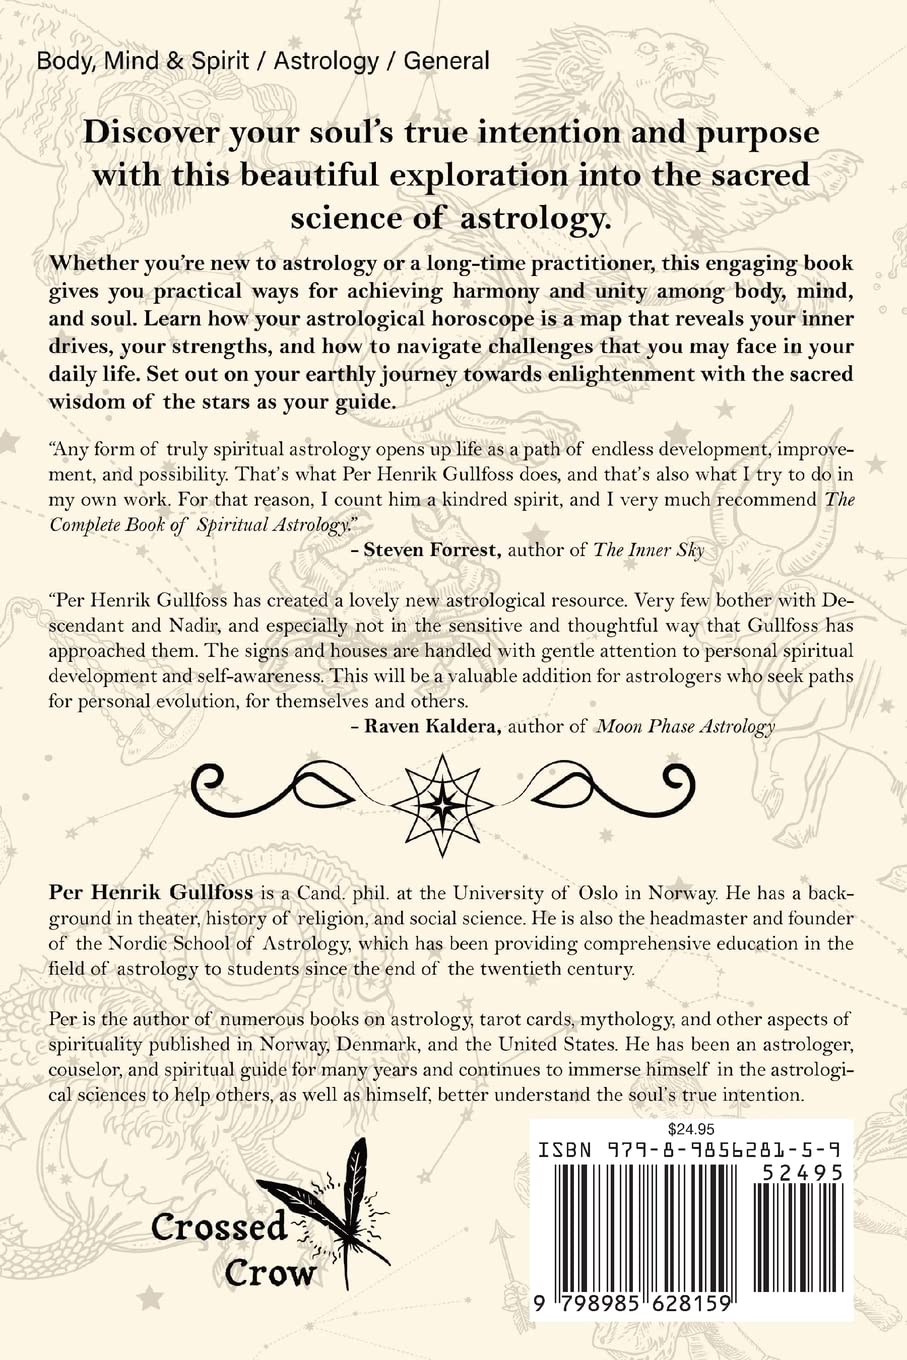 The Complete Book of Spiritual Astrology by Per Henrik Gullfoss